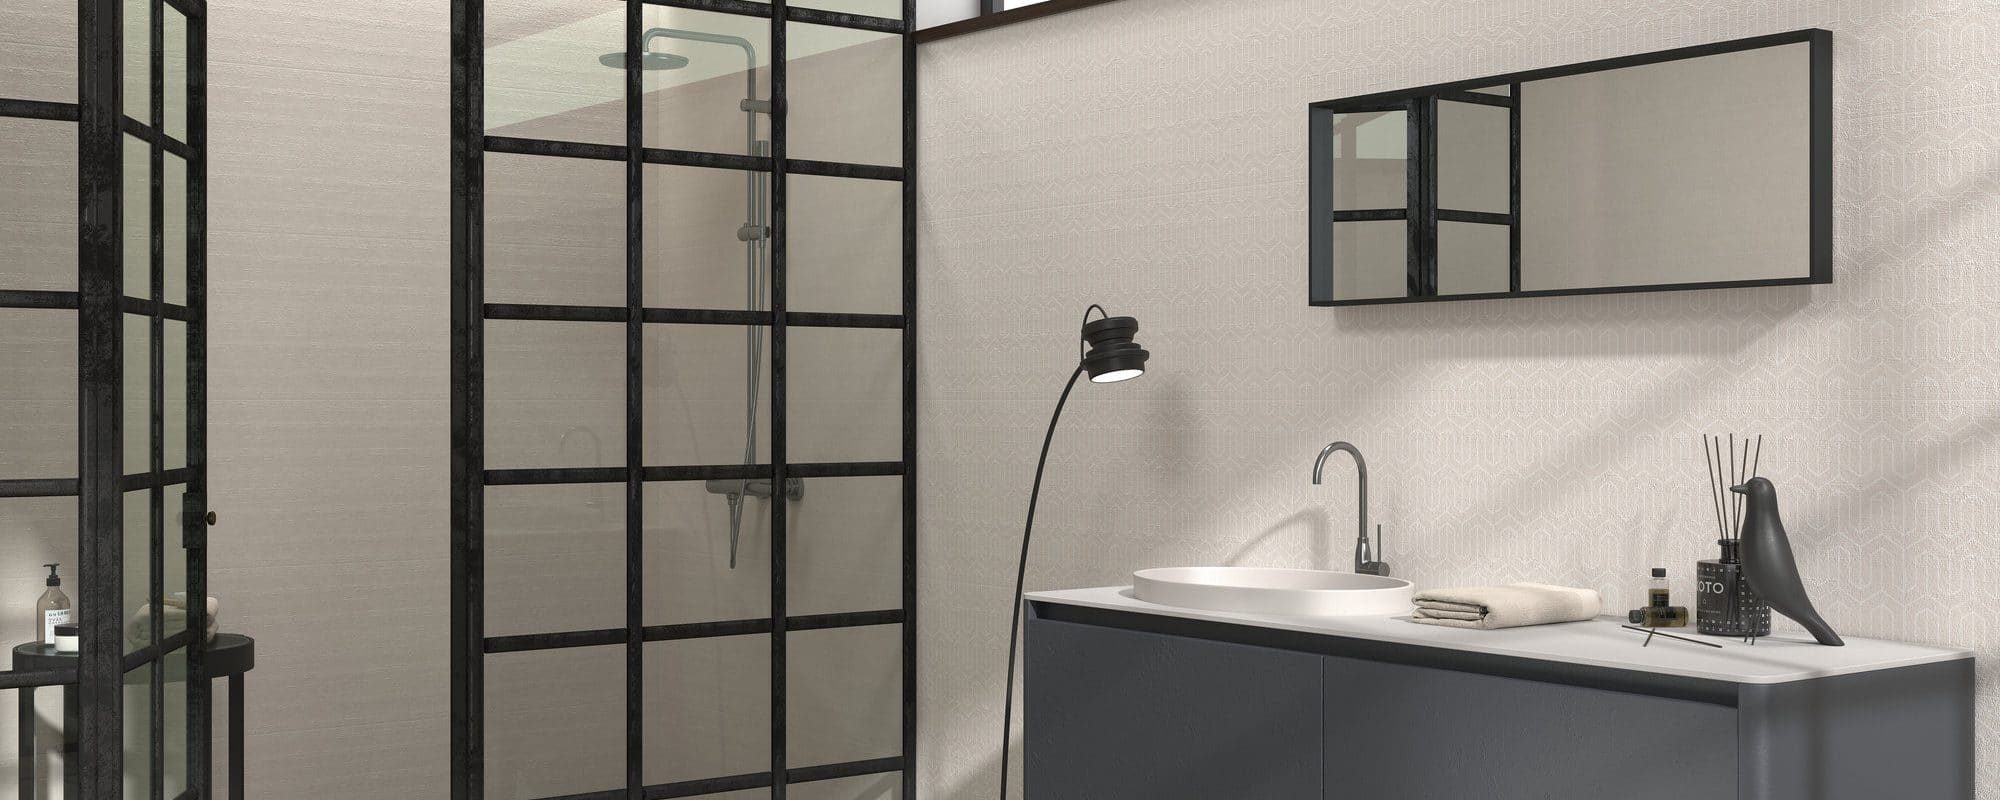 TWIST cement effect porcelain bathroom tiles uk slider 4